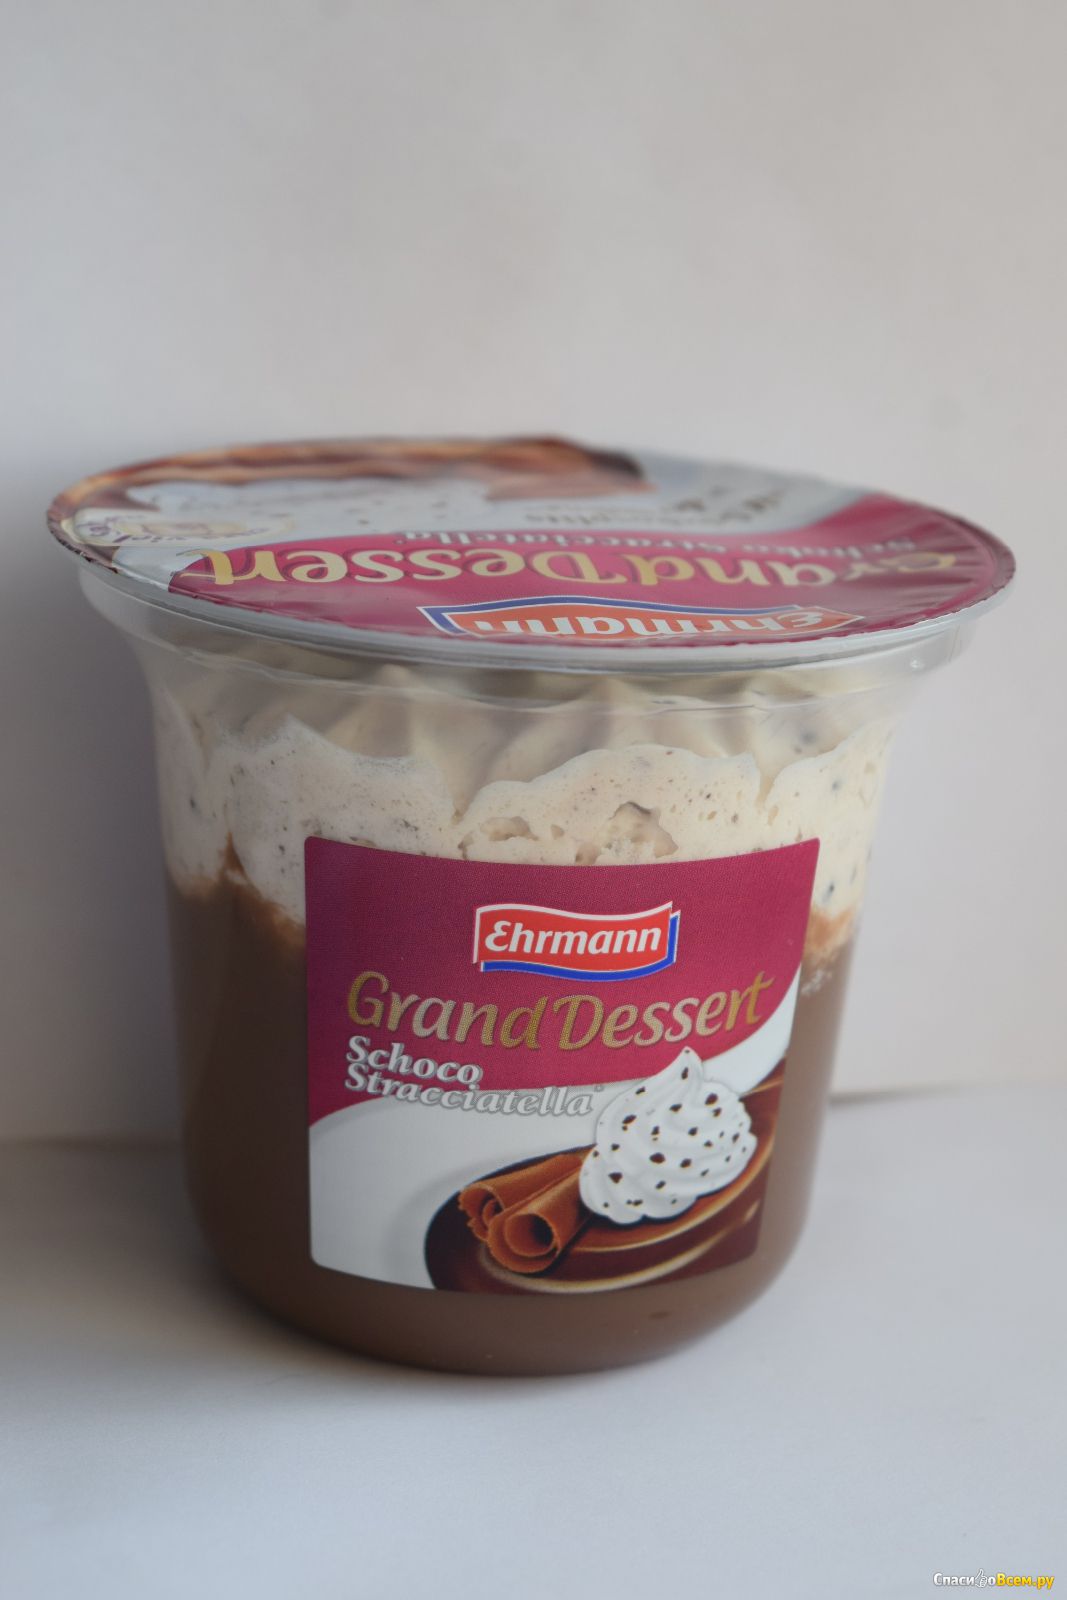 Ehrmann grand dessert шоколад. Пудинг Ehrmann Grand Dessert. Grand Desert пудинг шоколад. Ehrmann йогурт пудинг. Йогурт Эрманн пудинг шоколадный.